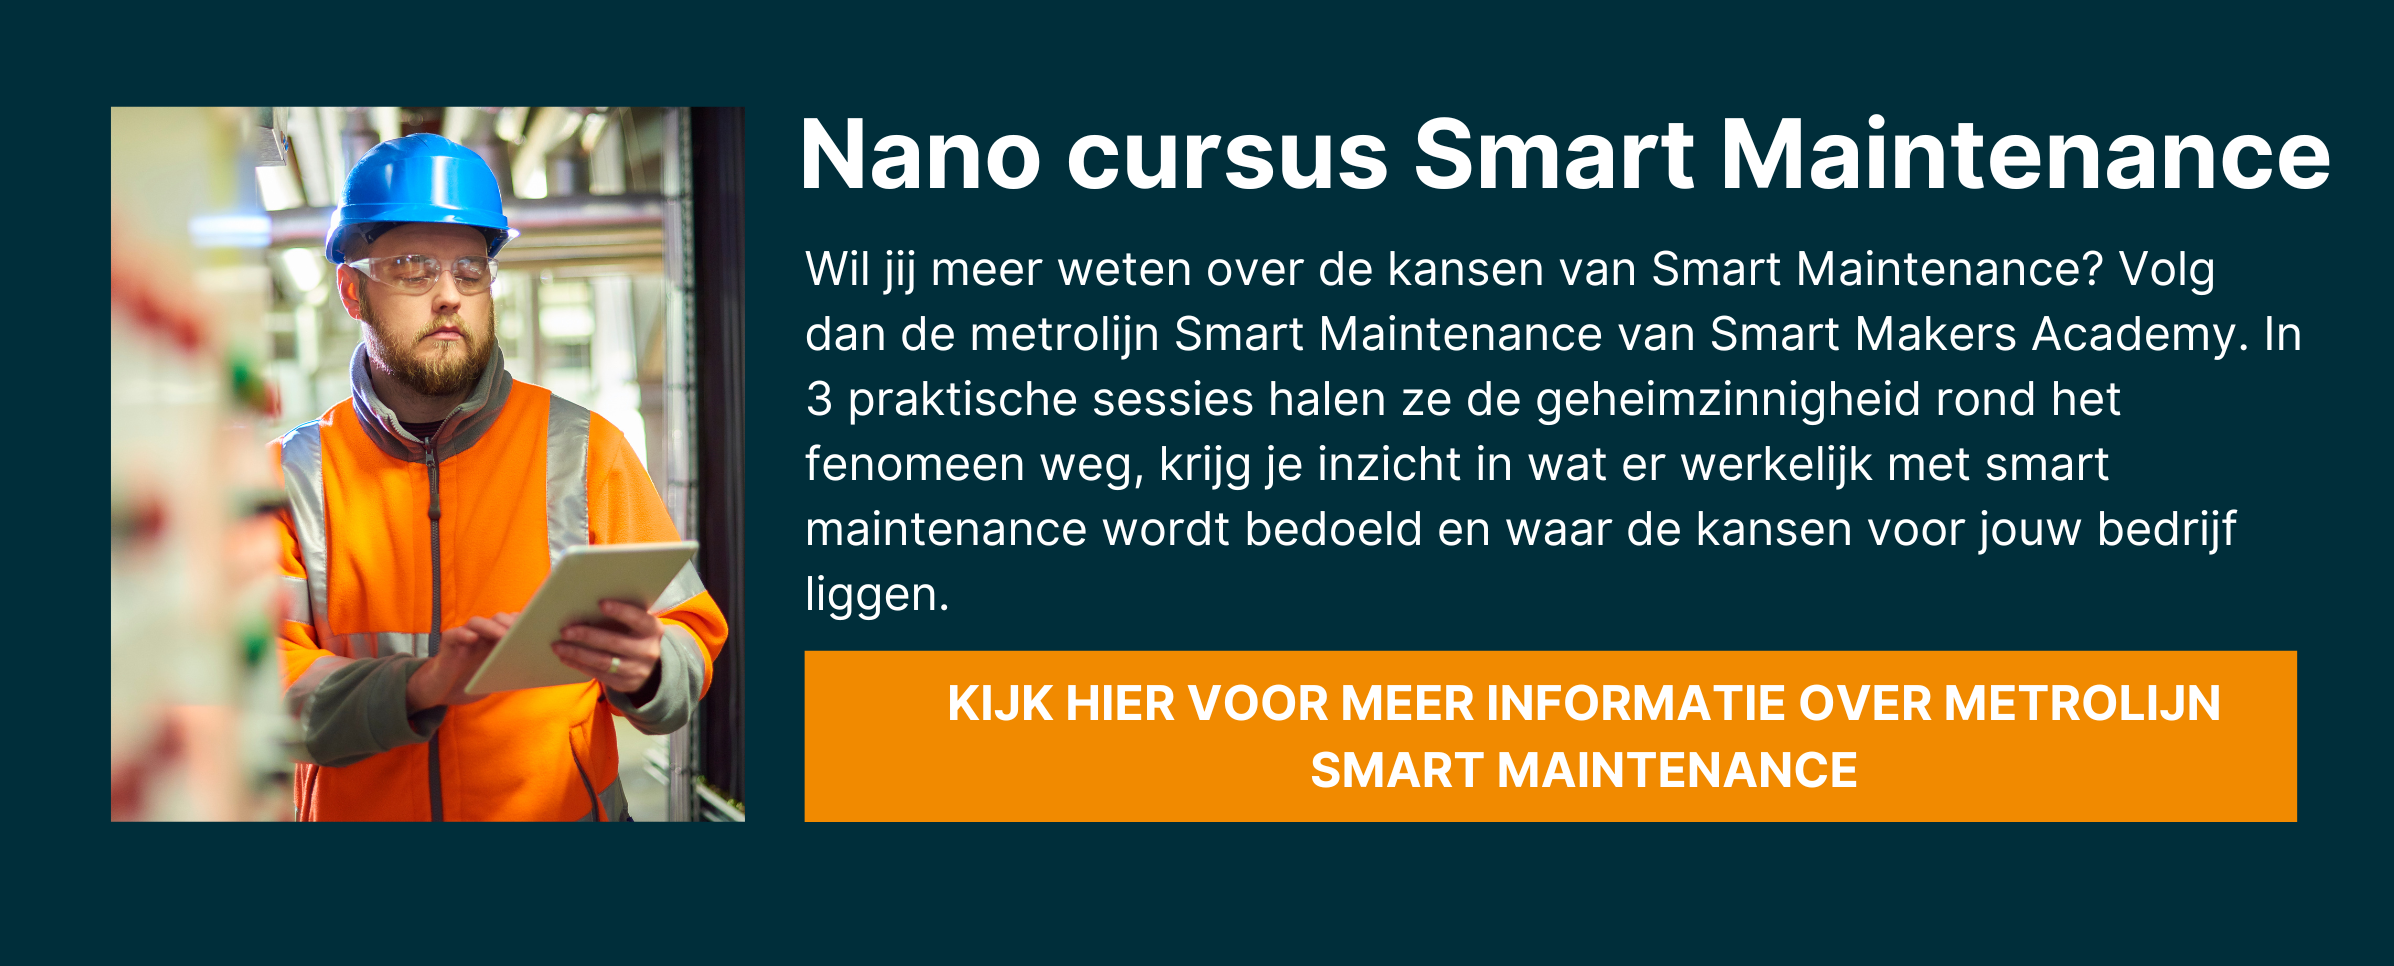 Nano cursus smart maintenance 